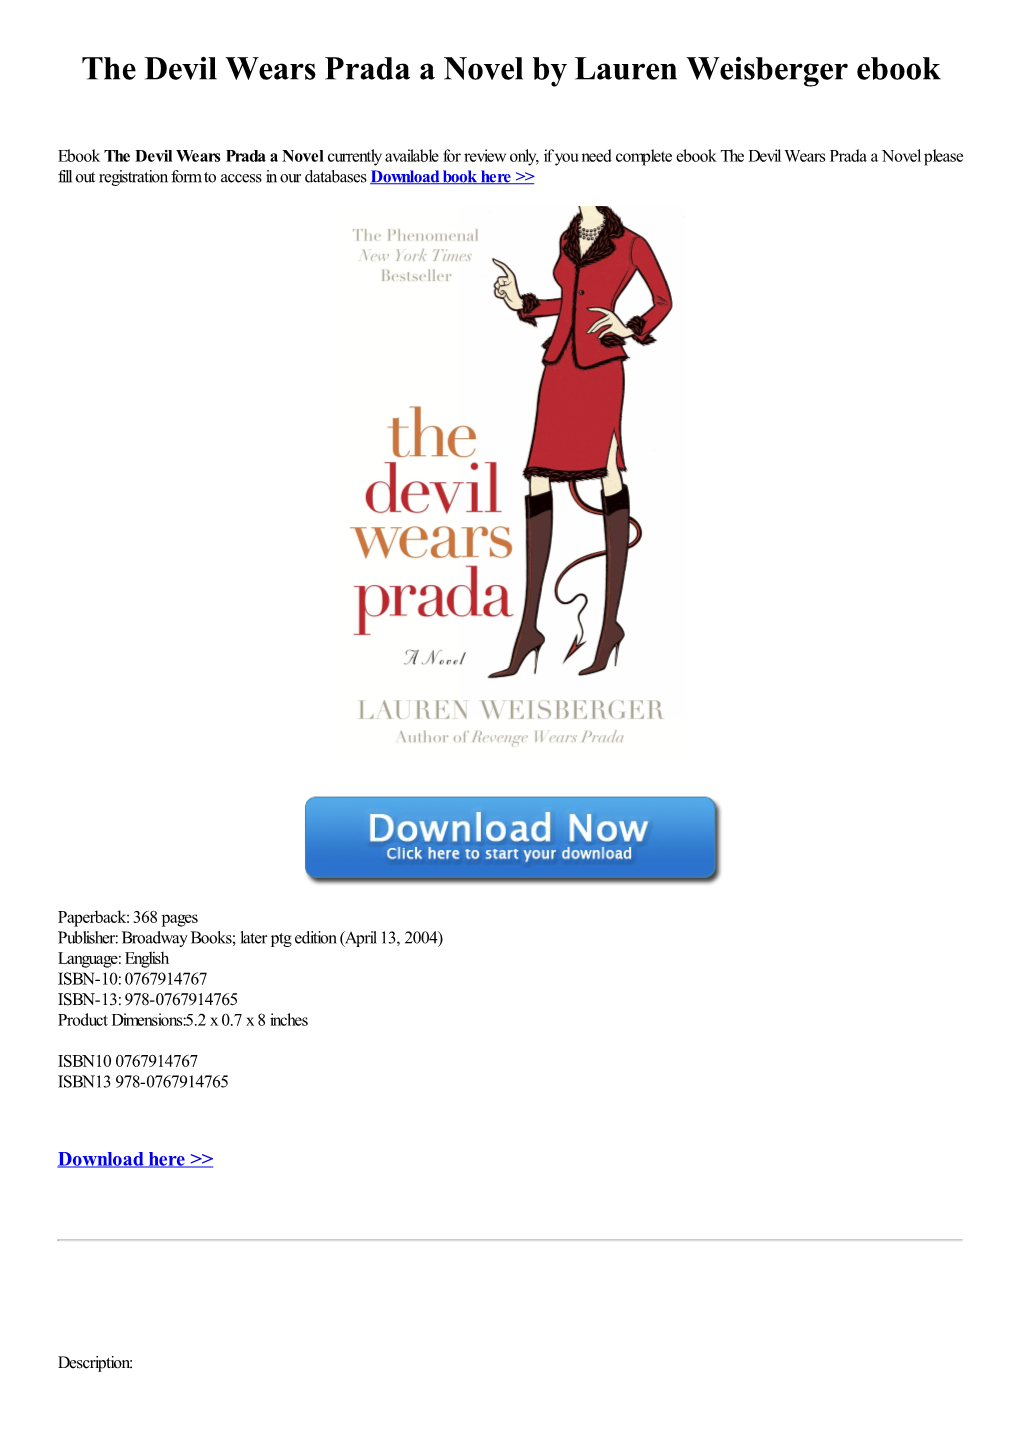 The Devil Wears Prada a Novel by Lauren Weisberger Ebook